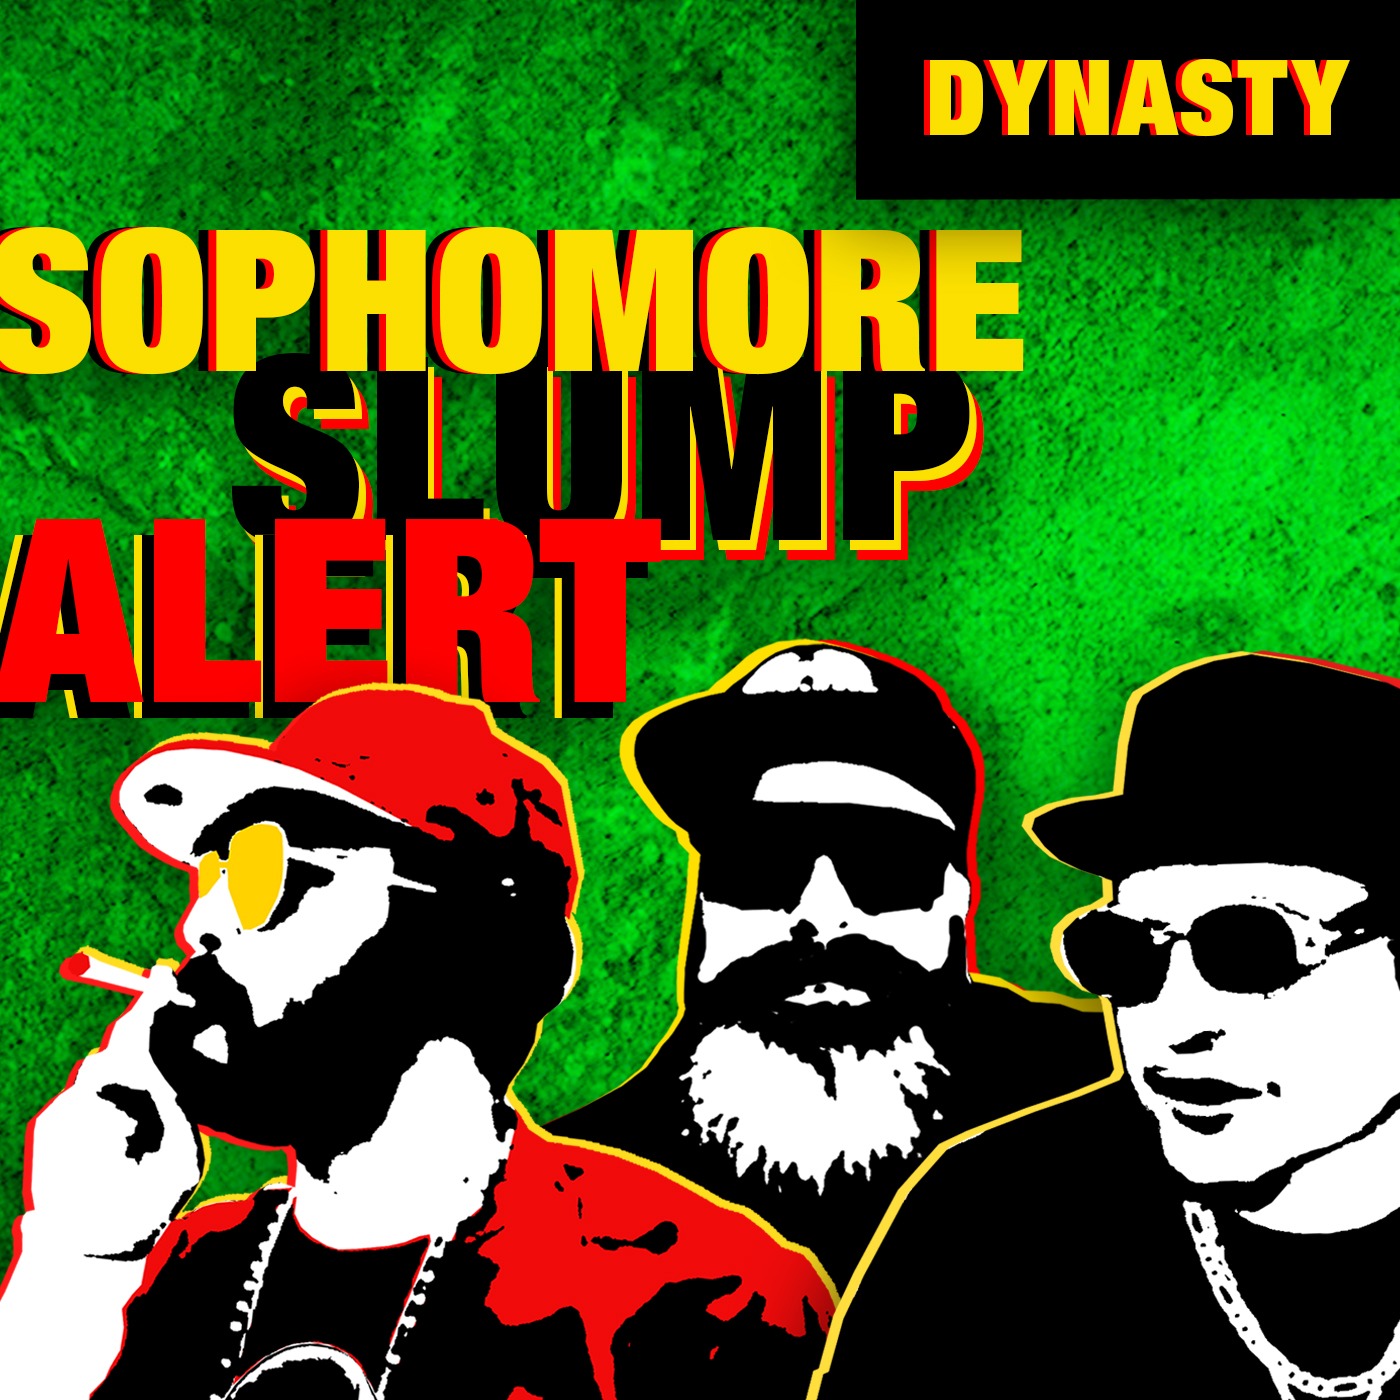 Sophomore Slump Alert | Dynasty Fantasy Football Image